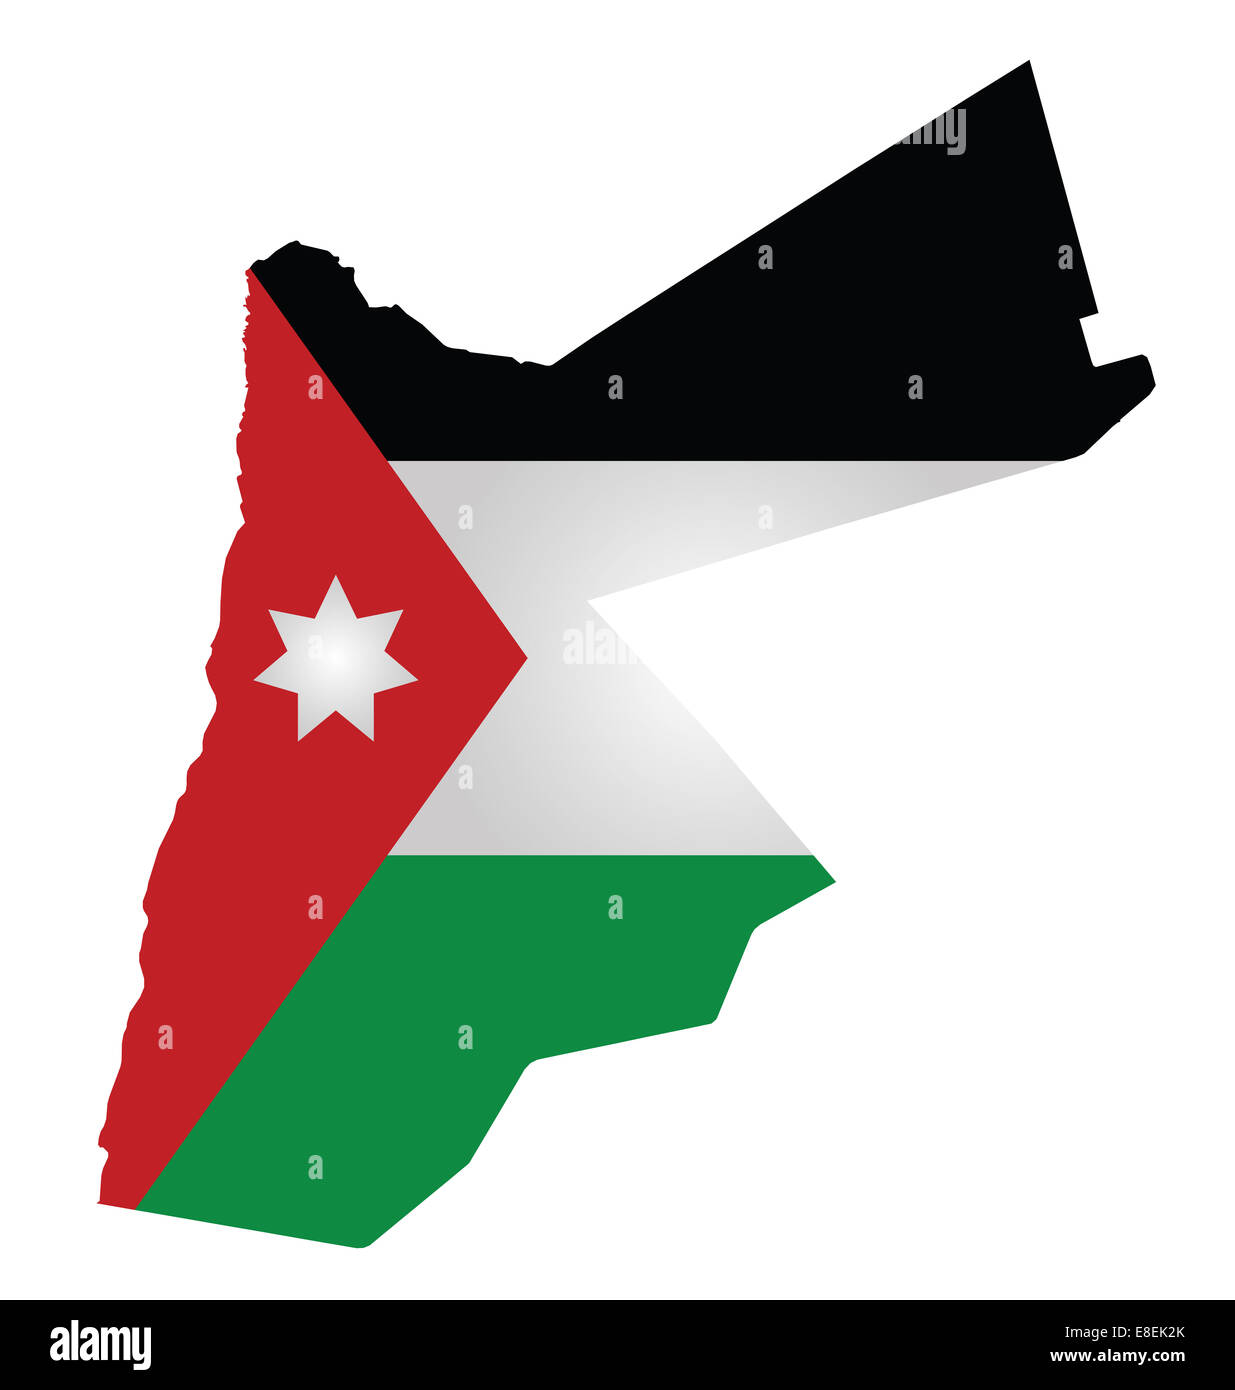 Flag of Hashemite Kingdom of Jordan Stock Photo - Alamy